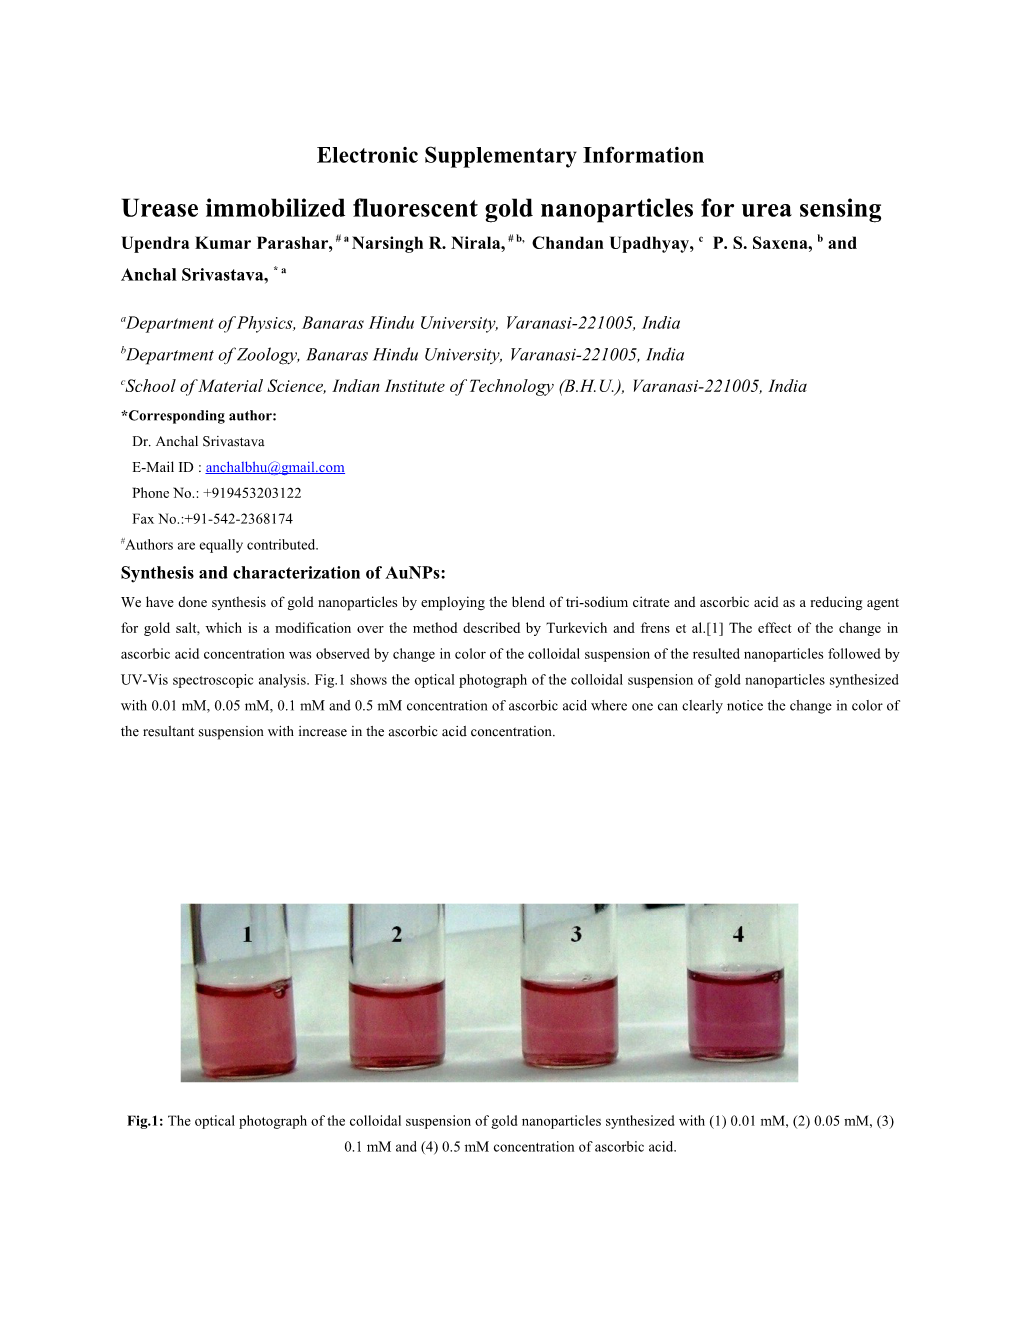 Urease Immobilized Fluorescent Gold Nanoparticles for Urea Sensing